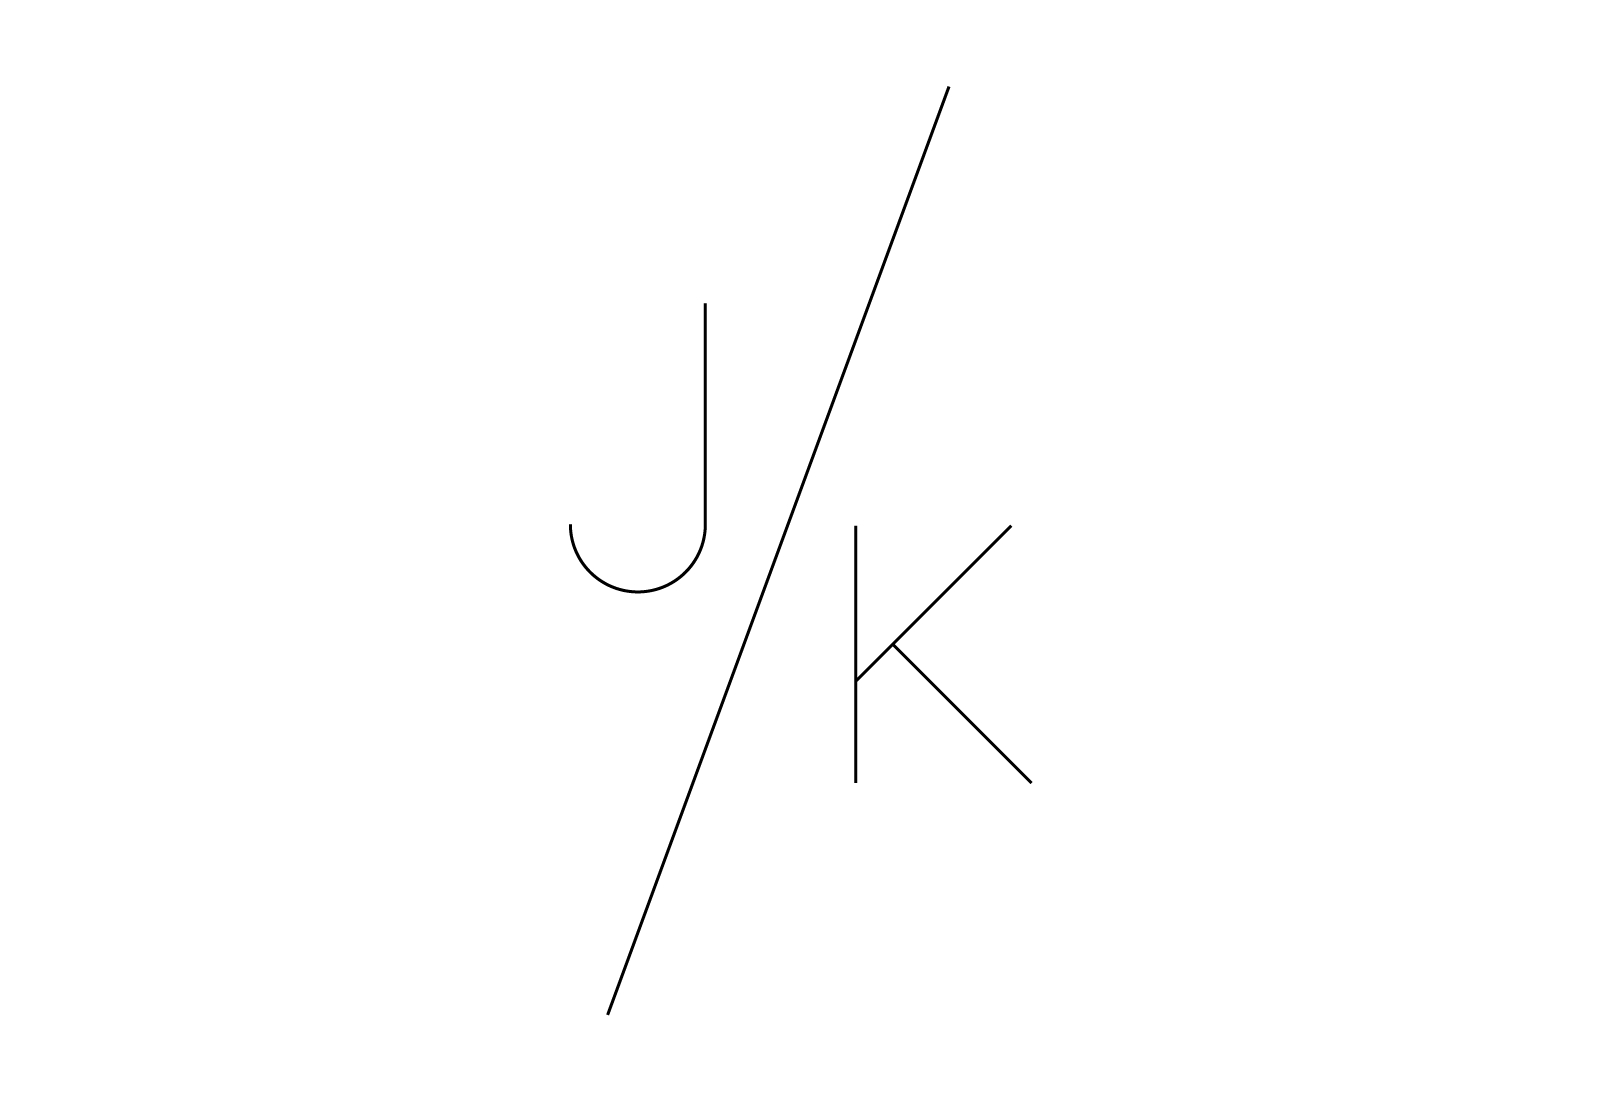 logo-1600-1100-BLACK